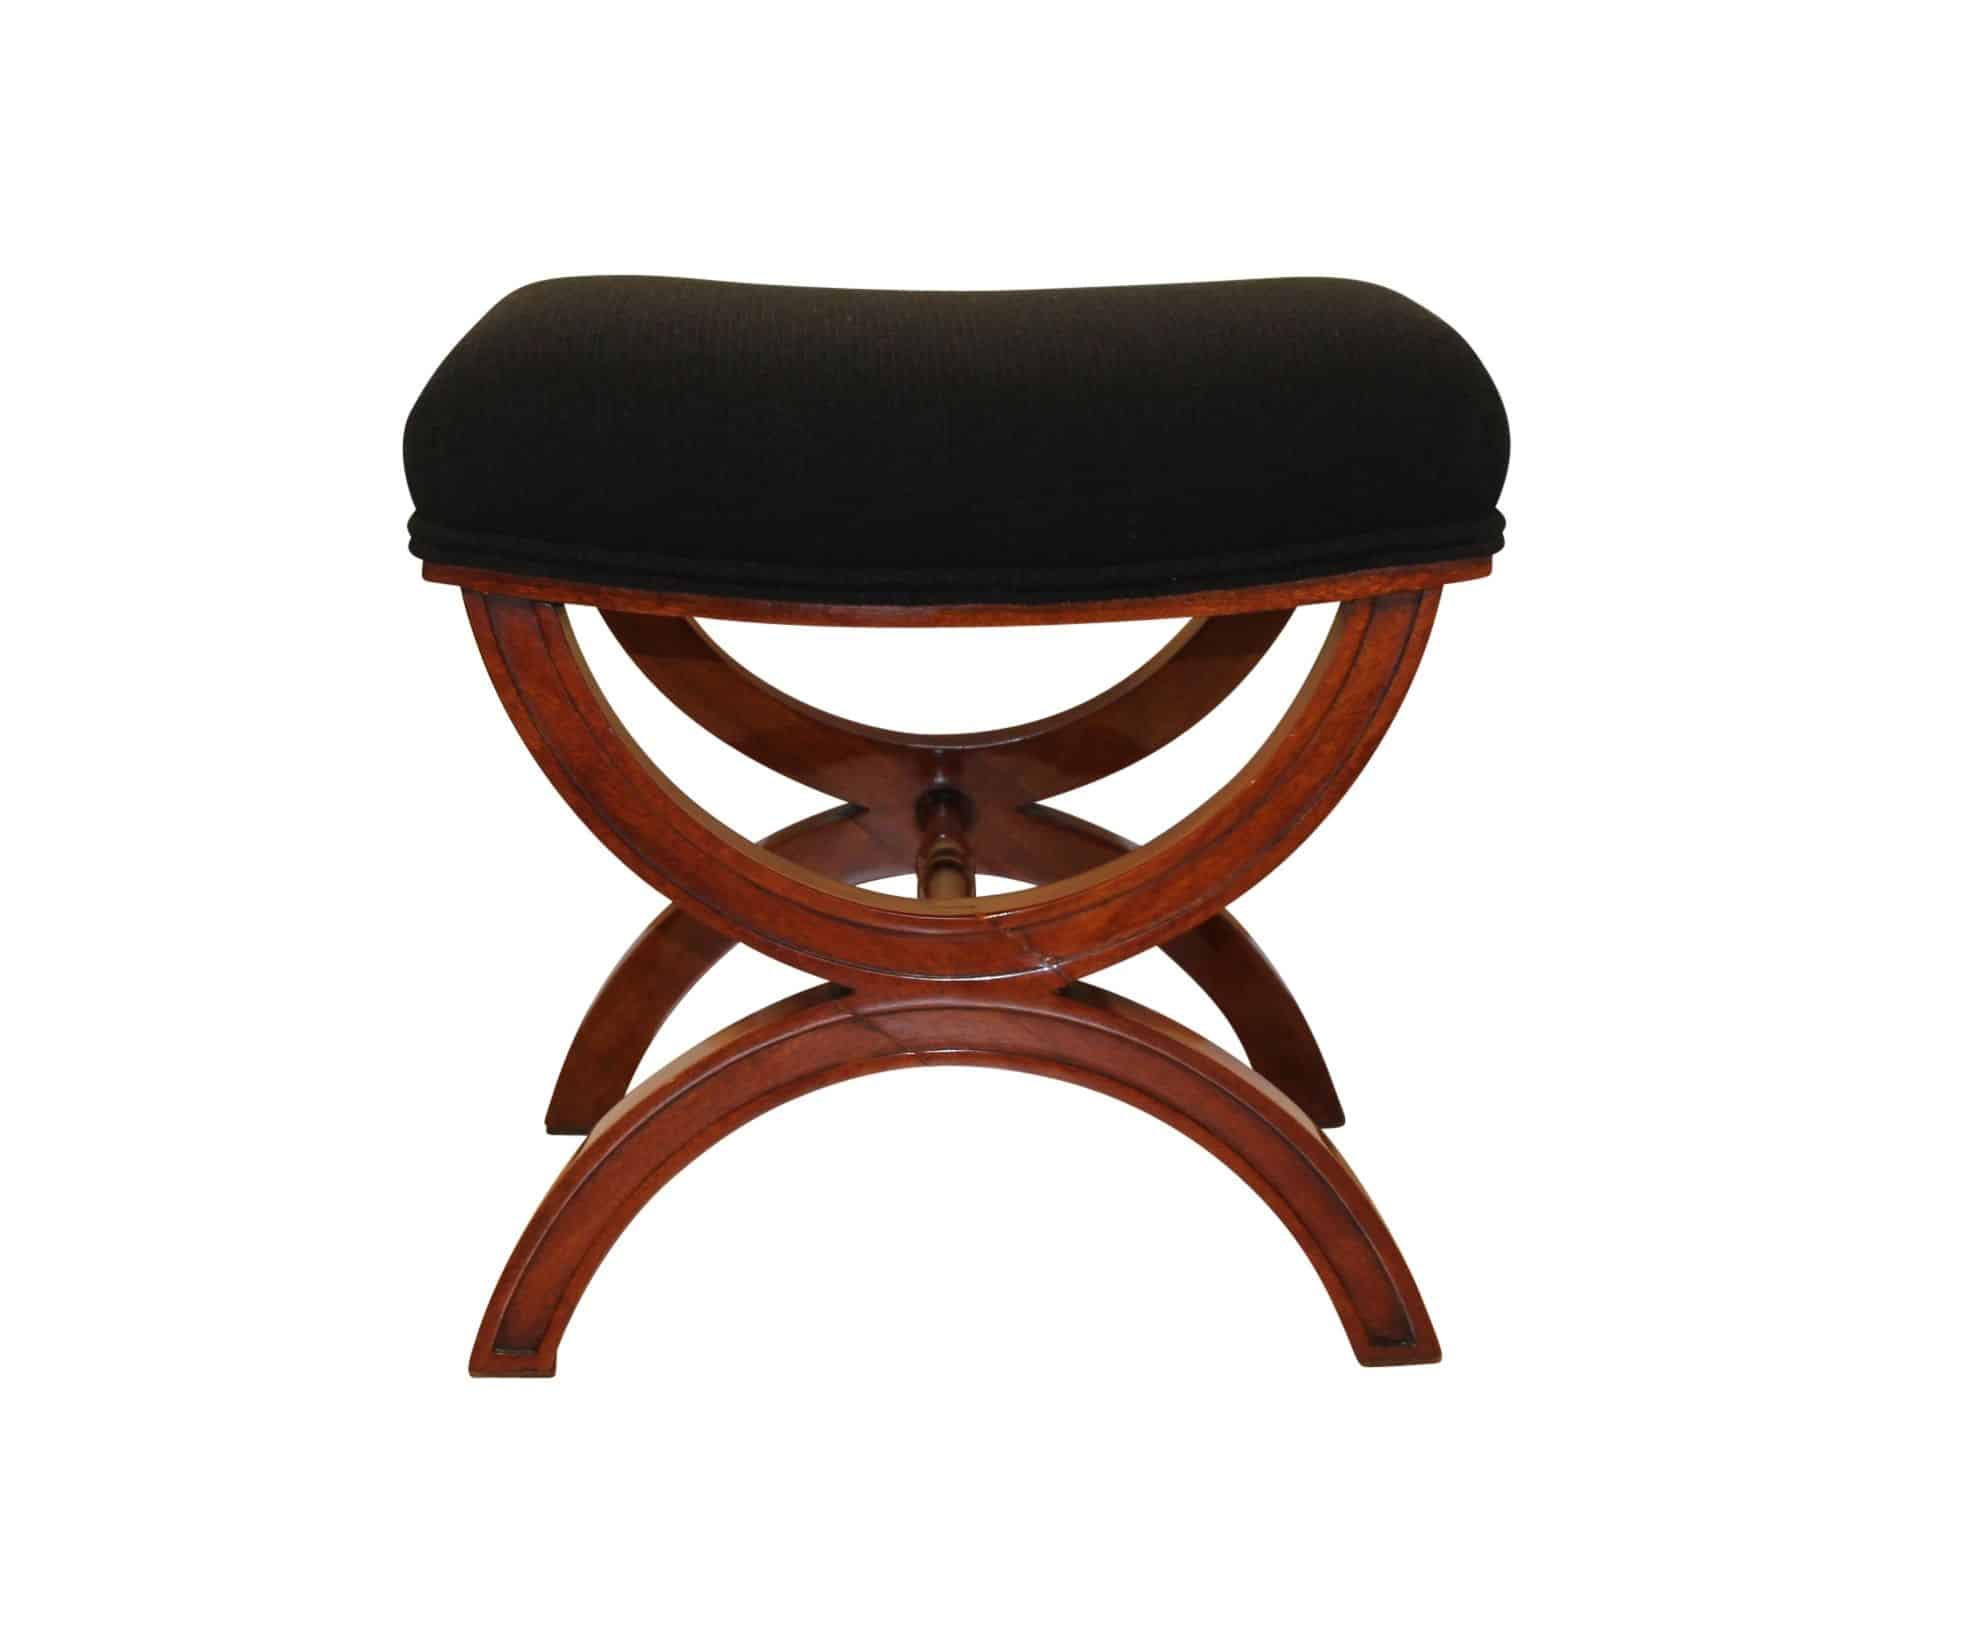 Mahogany Furniture: Quality and History